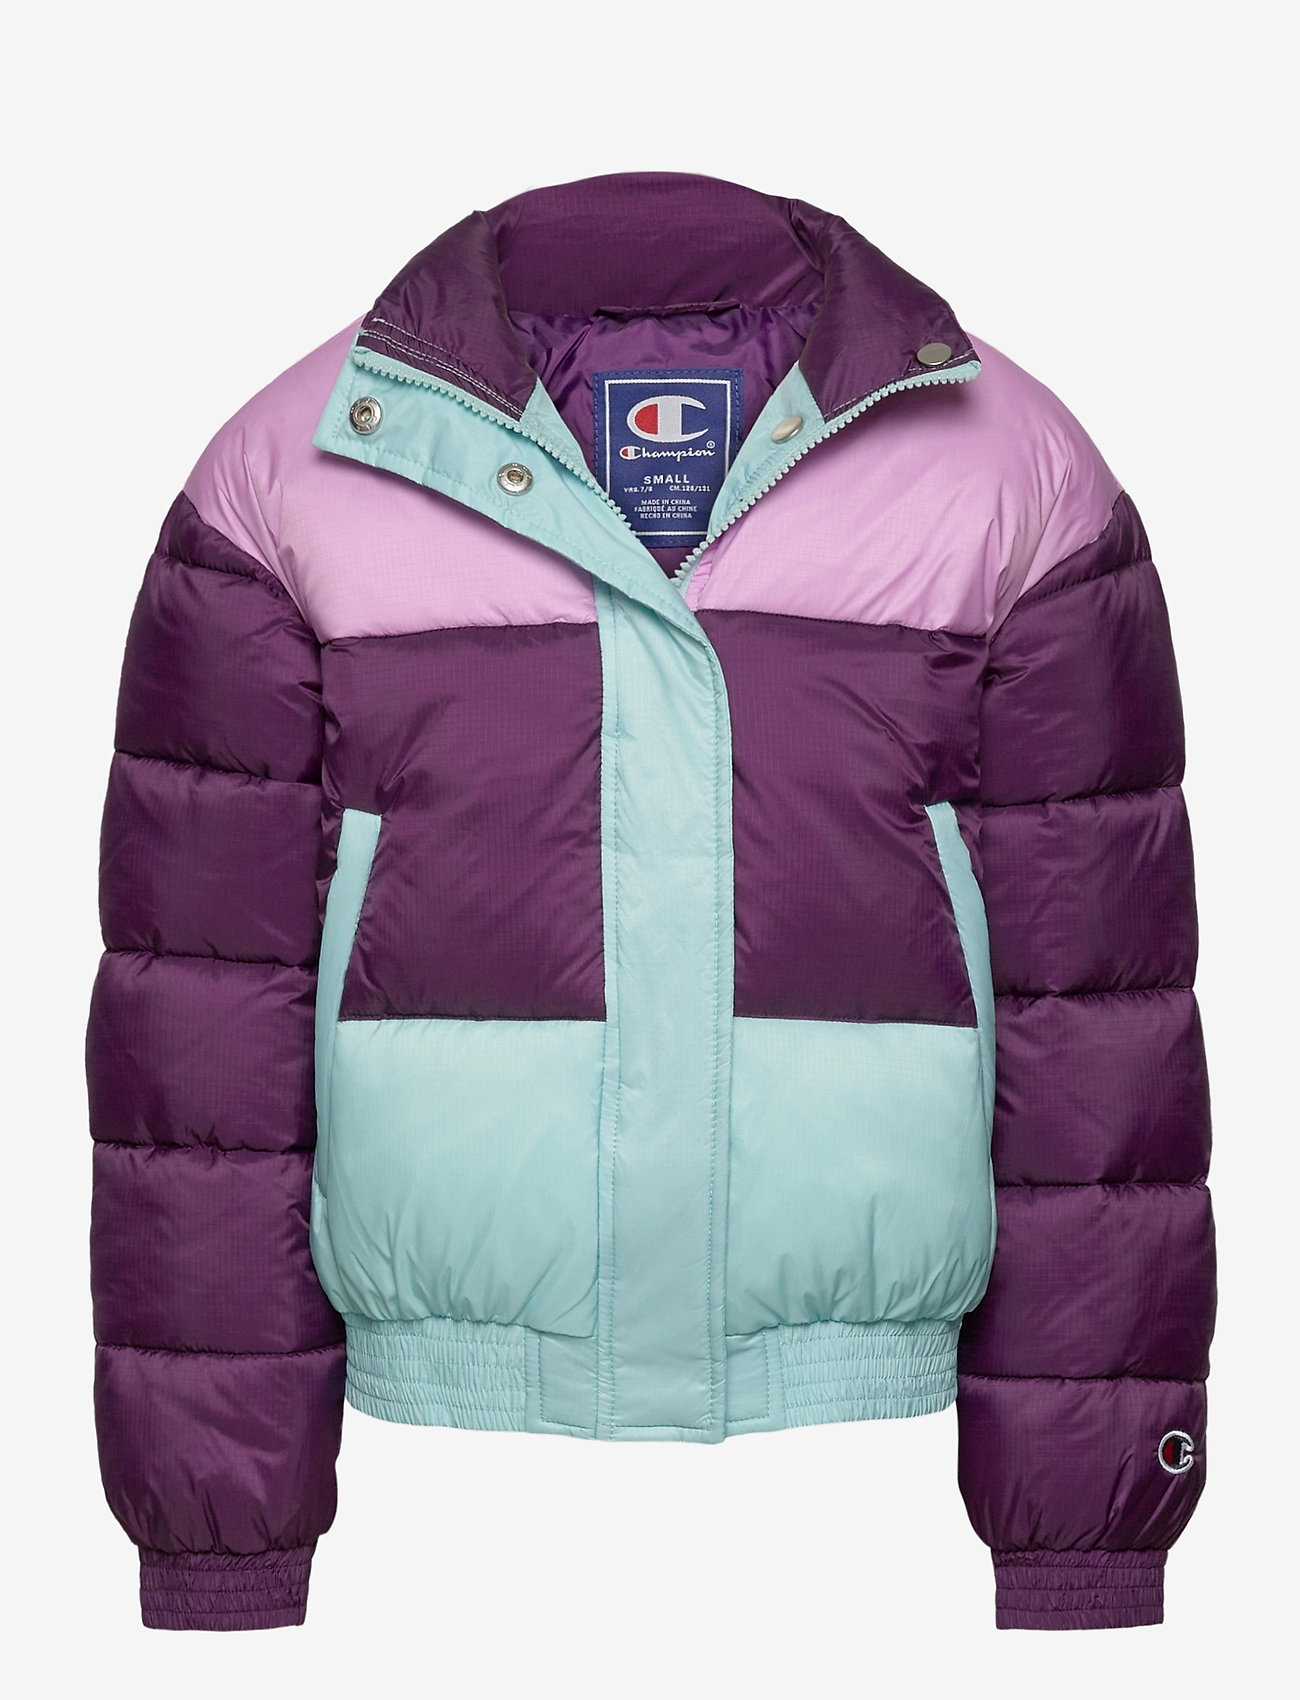 Champion - Jacket - isolerede jakker - deep purple - 0